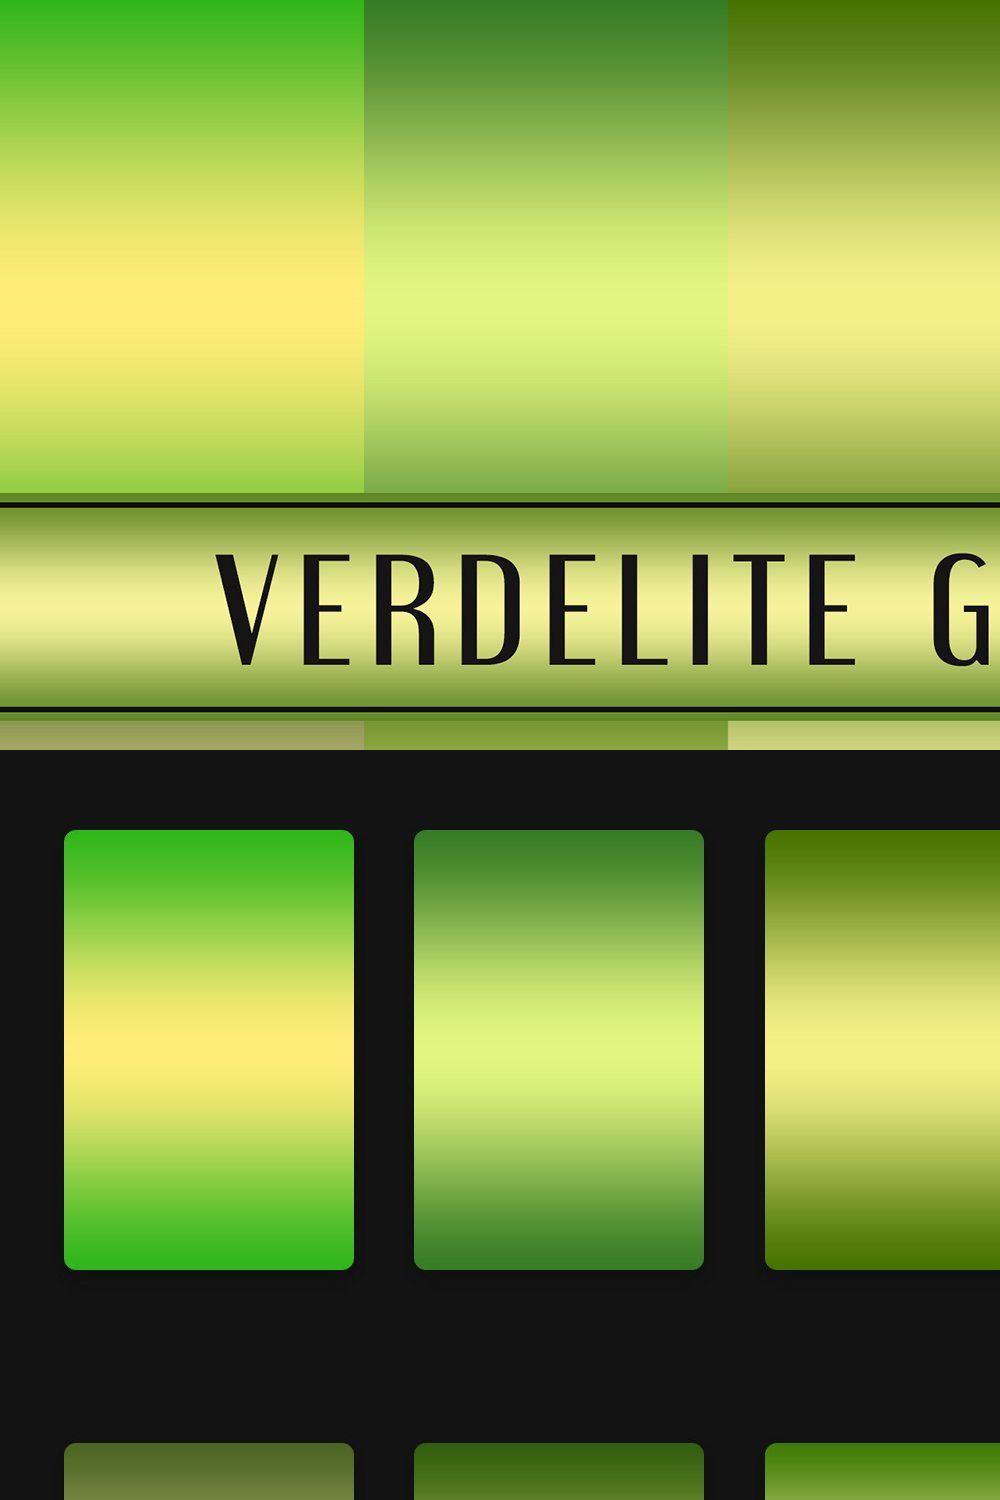 Verdelite Gradients pinterest preview image.